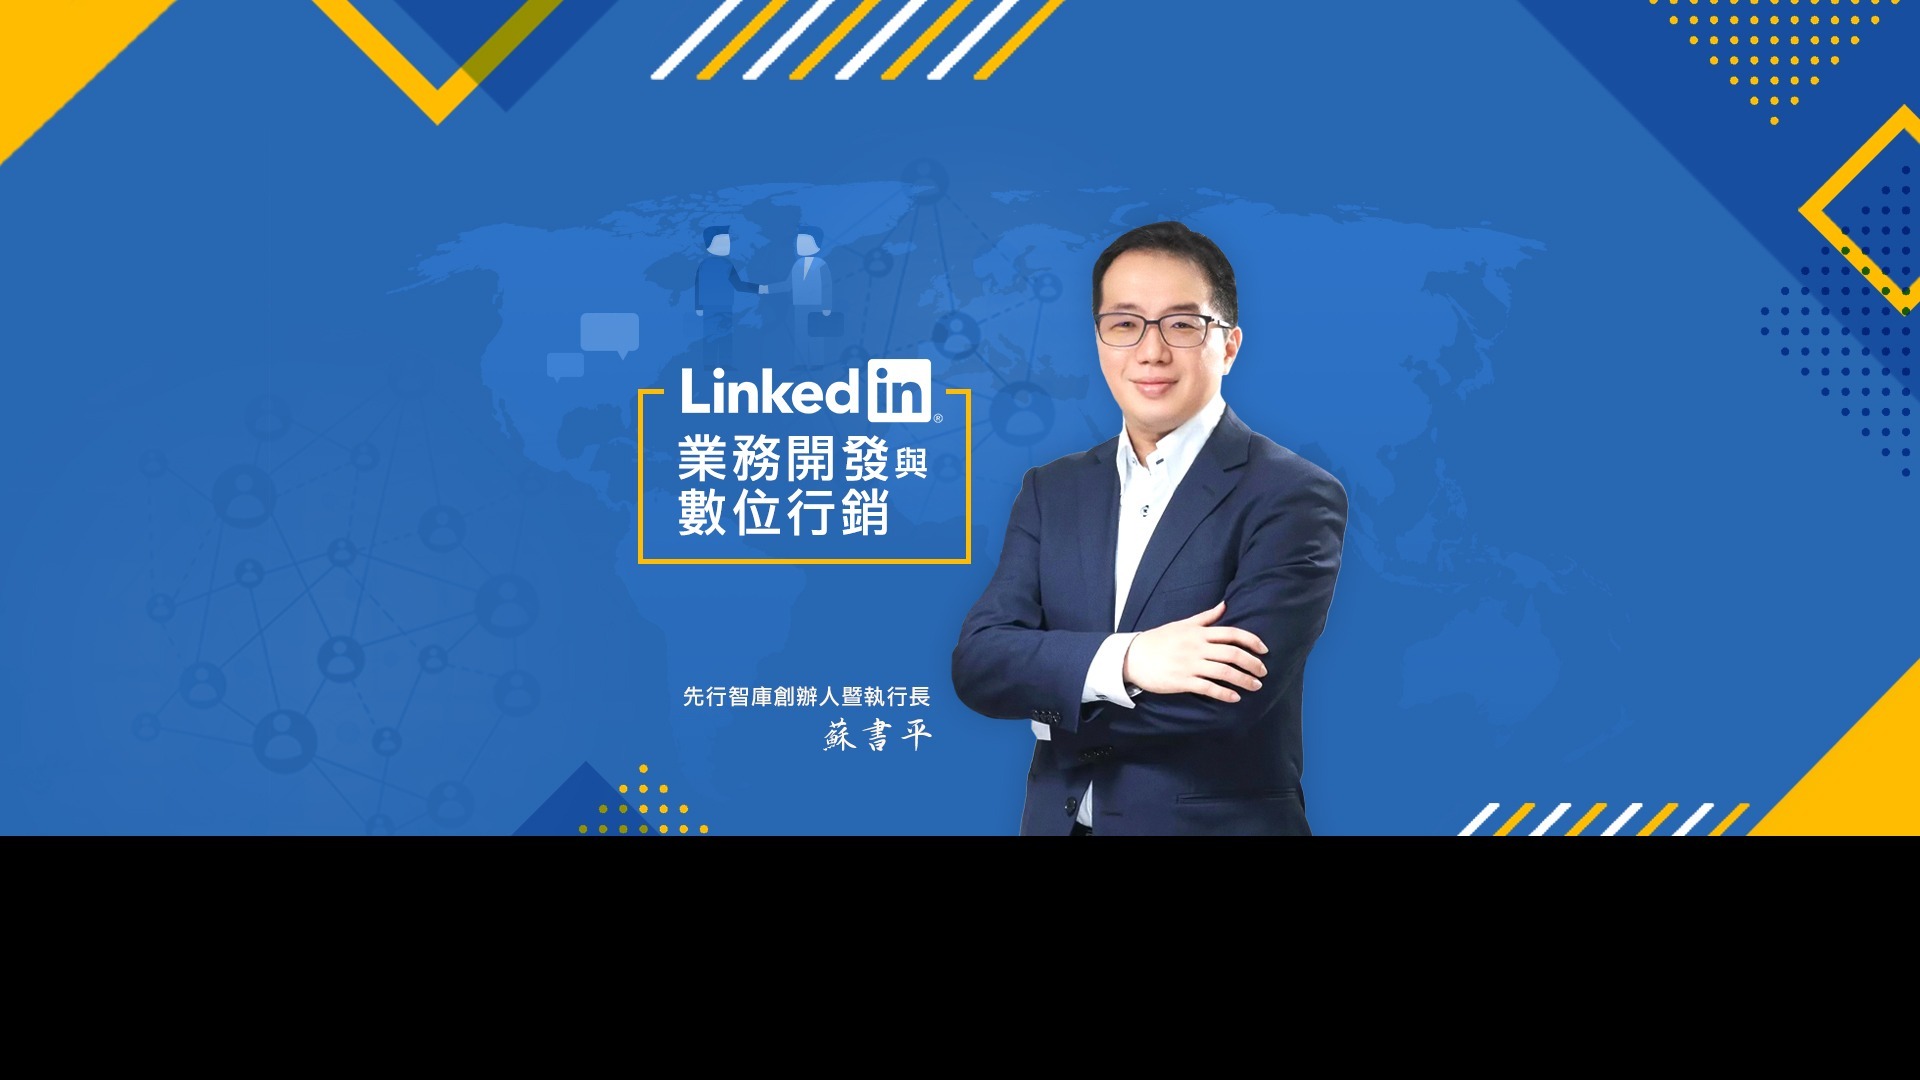 LinkedIn業務開發與數位行銷